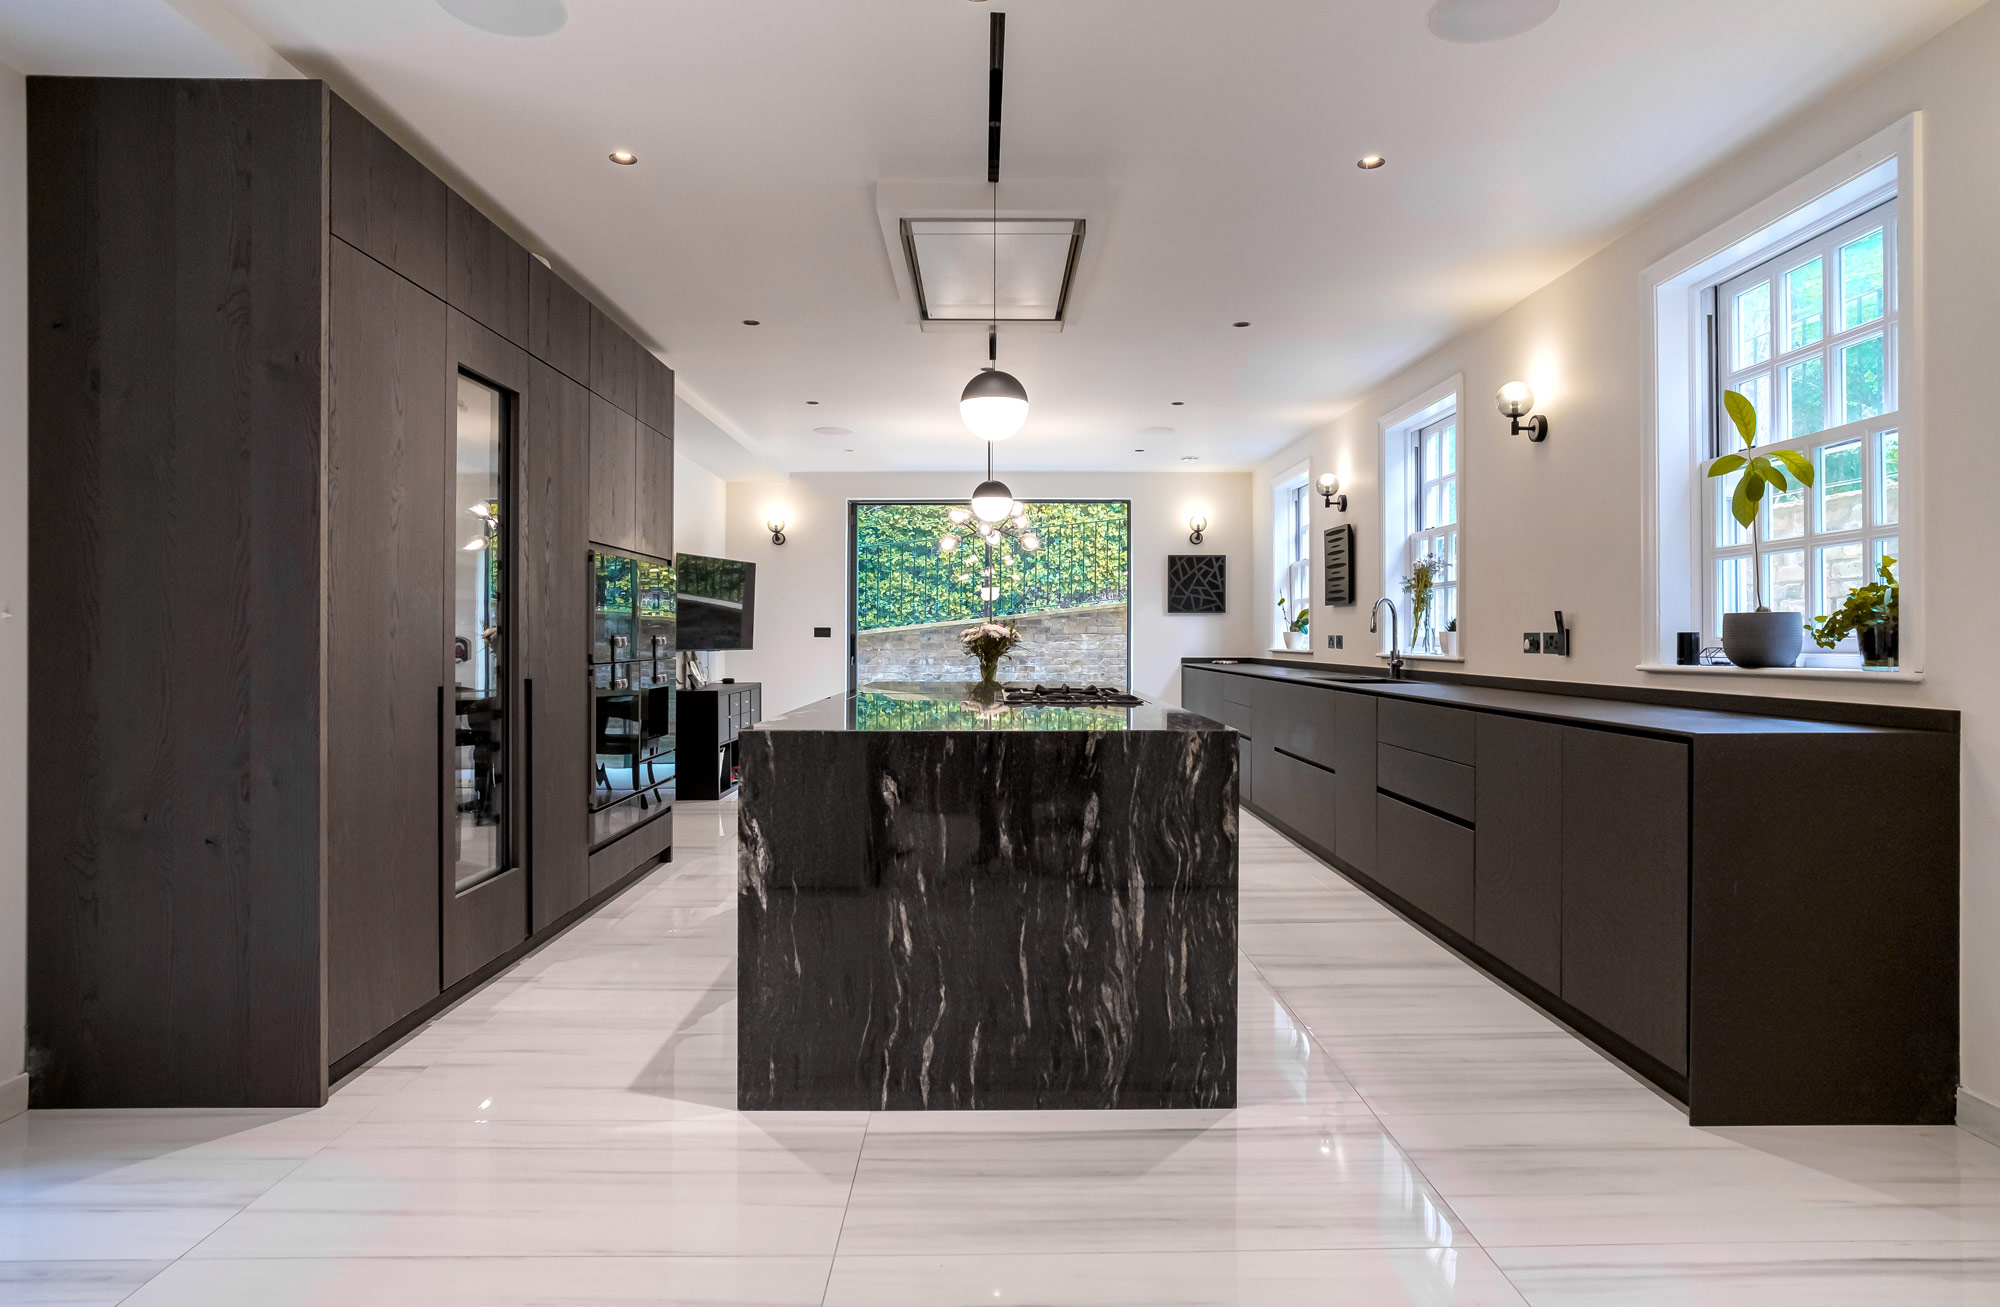 A bespoke contemporary kitchen by Fontana in Loughton Essex | Design as Art | interior architectural design studio | Design portfolio Fontana